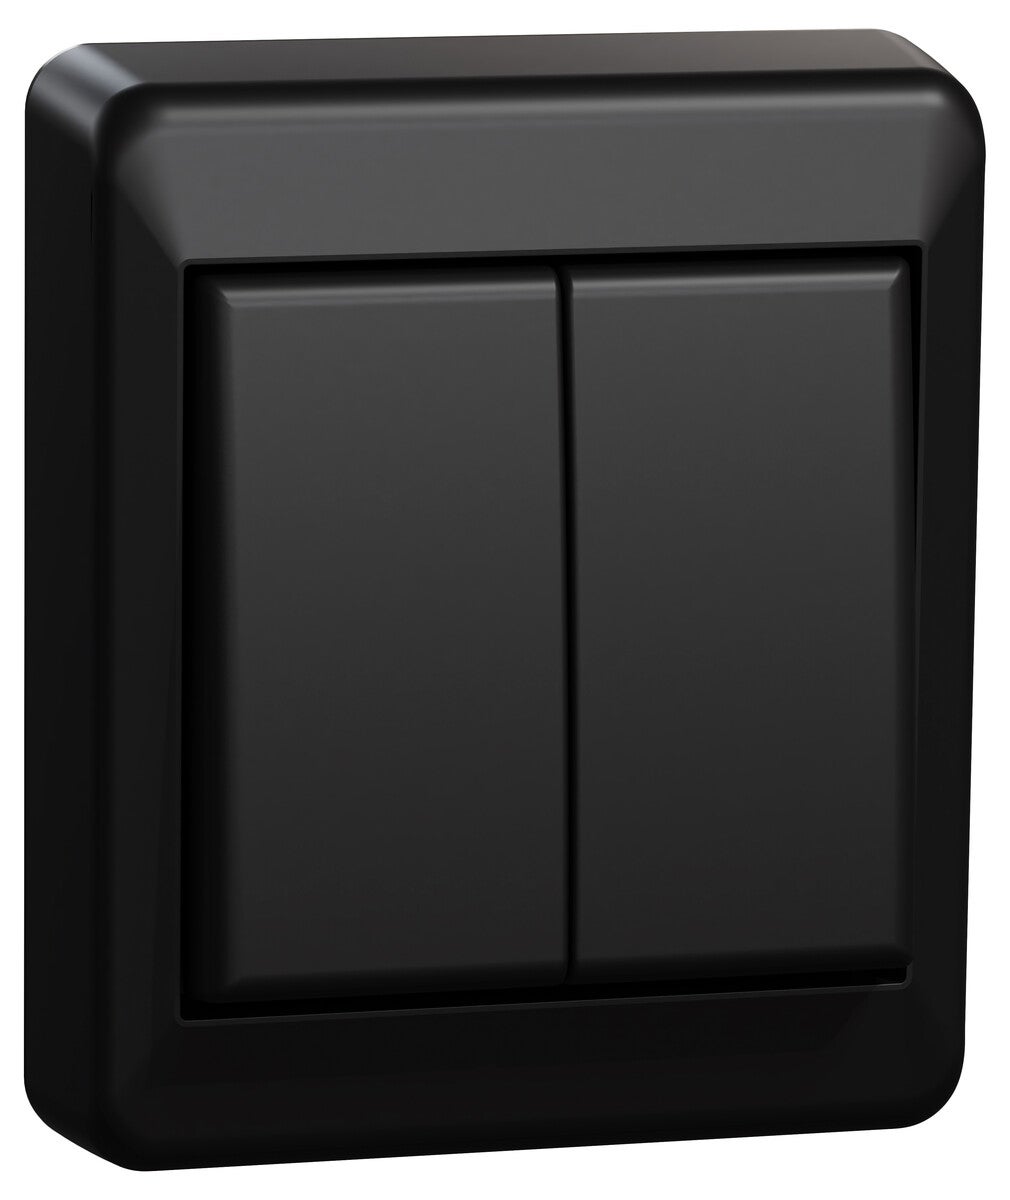 Elko RS utanpåliggande strömbrytare kron, svart